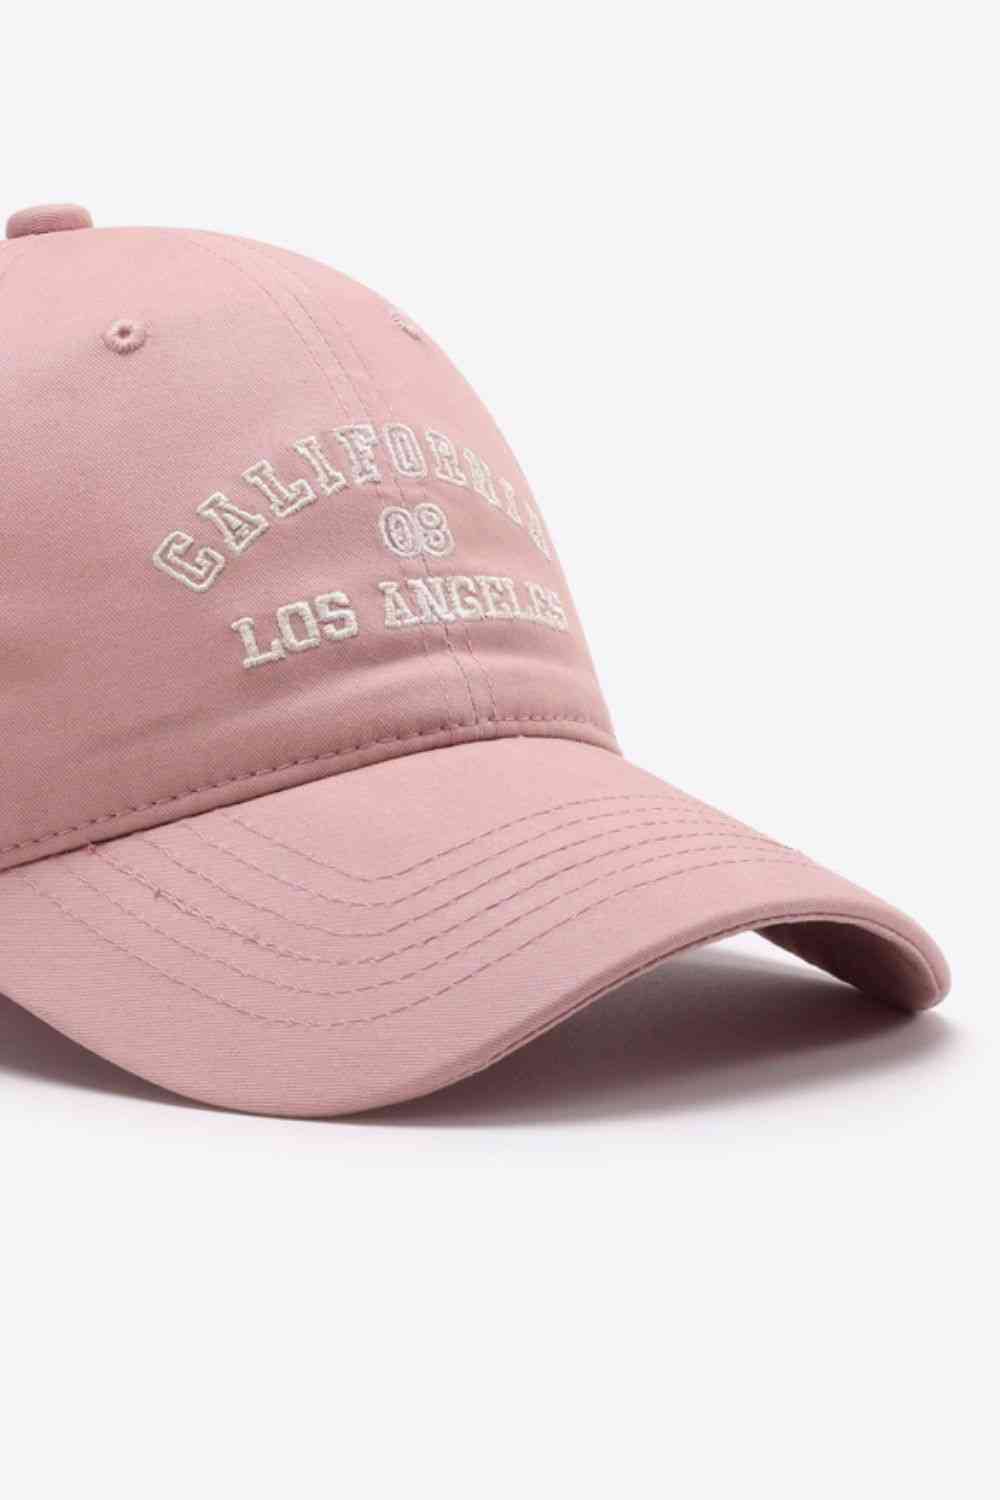 CALIFORNIA LOS ANGELES Adjustable Baseball Cap - Rose Gold Co. Shop